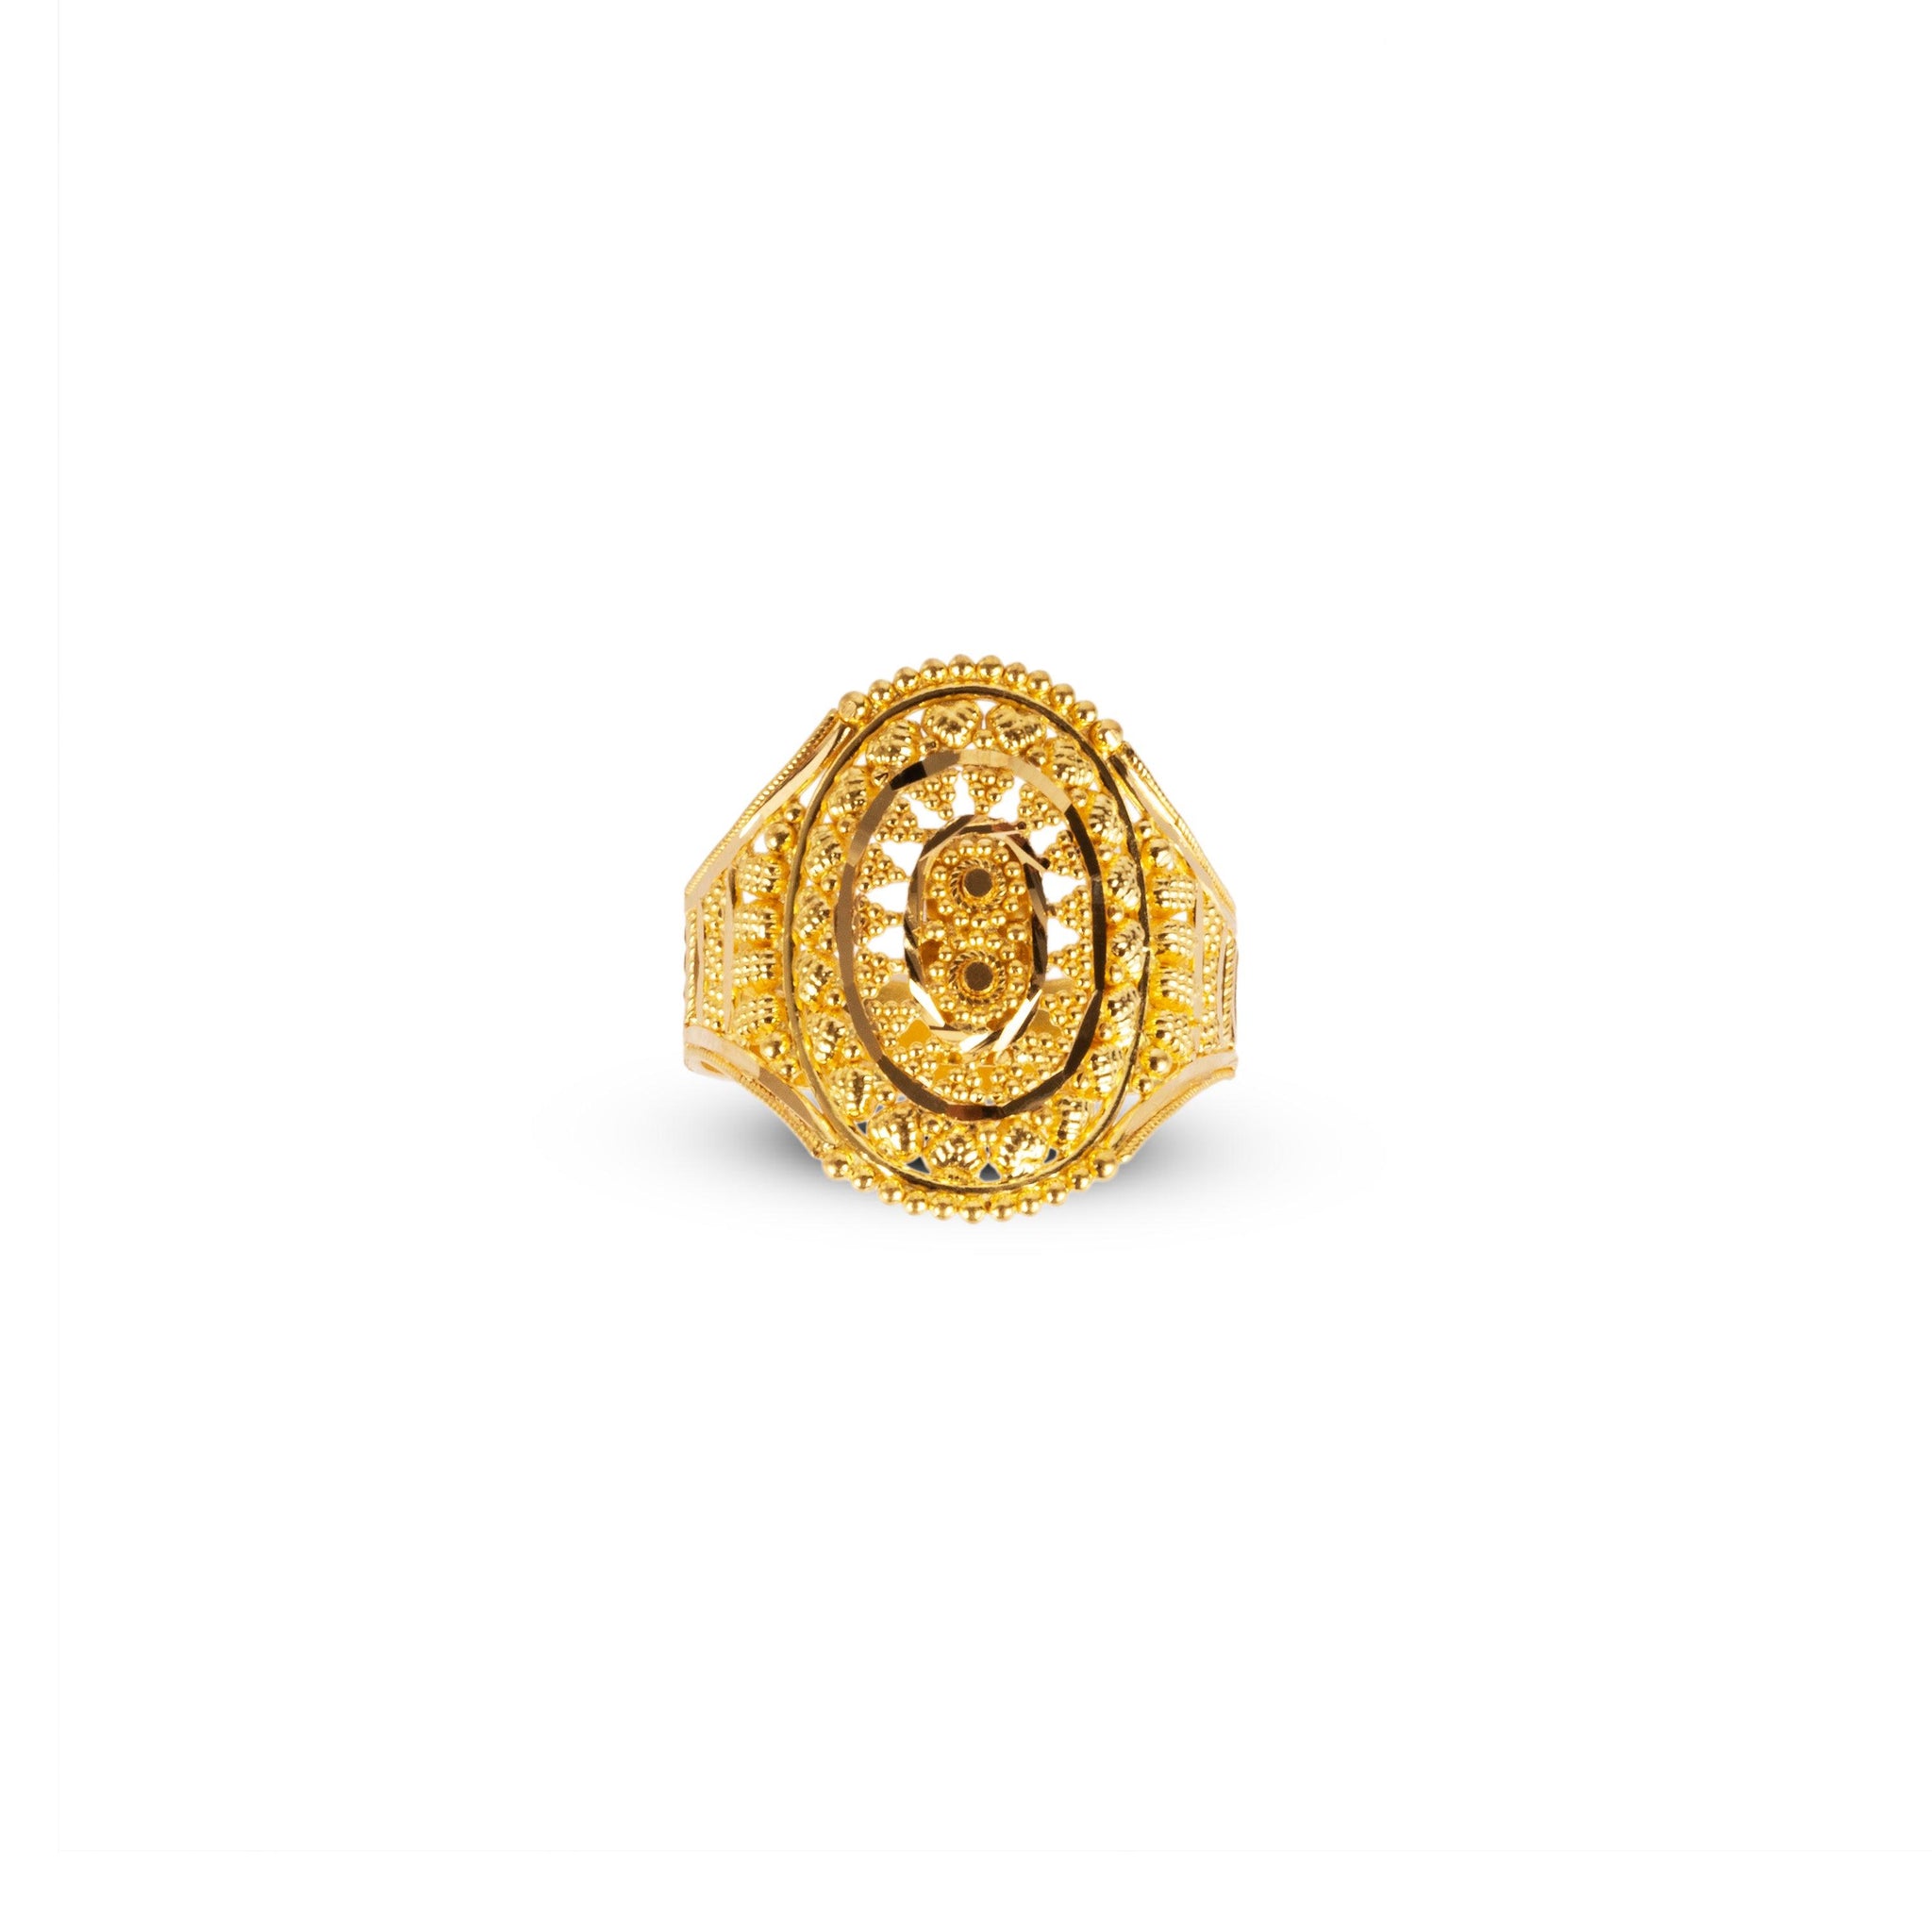 22ct Gold Filigree Design Ring LR-6639